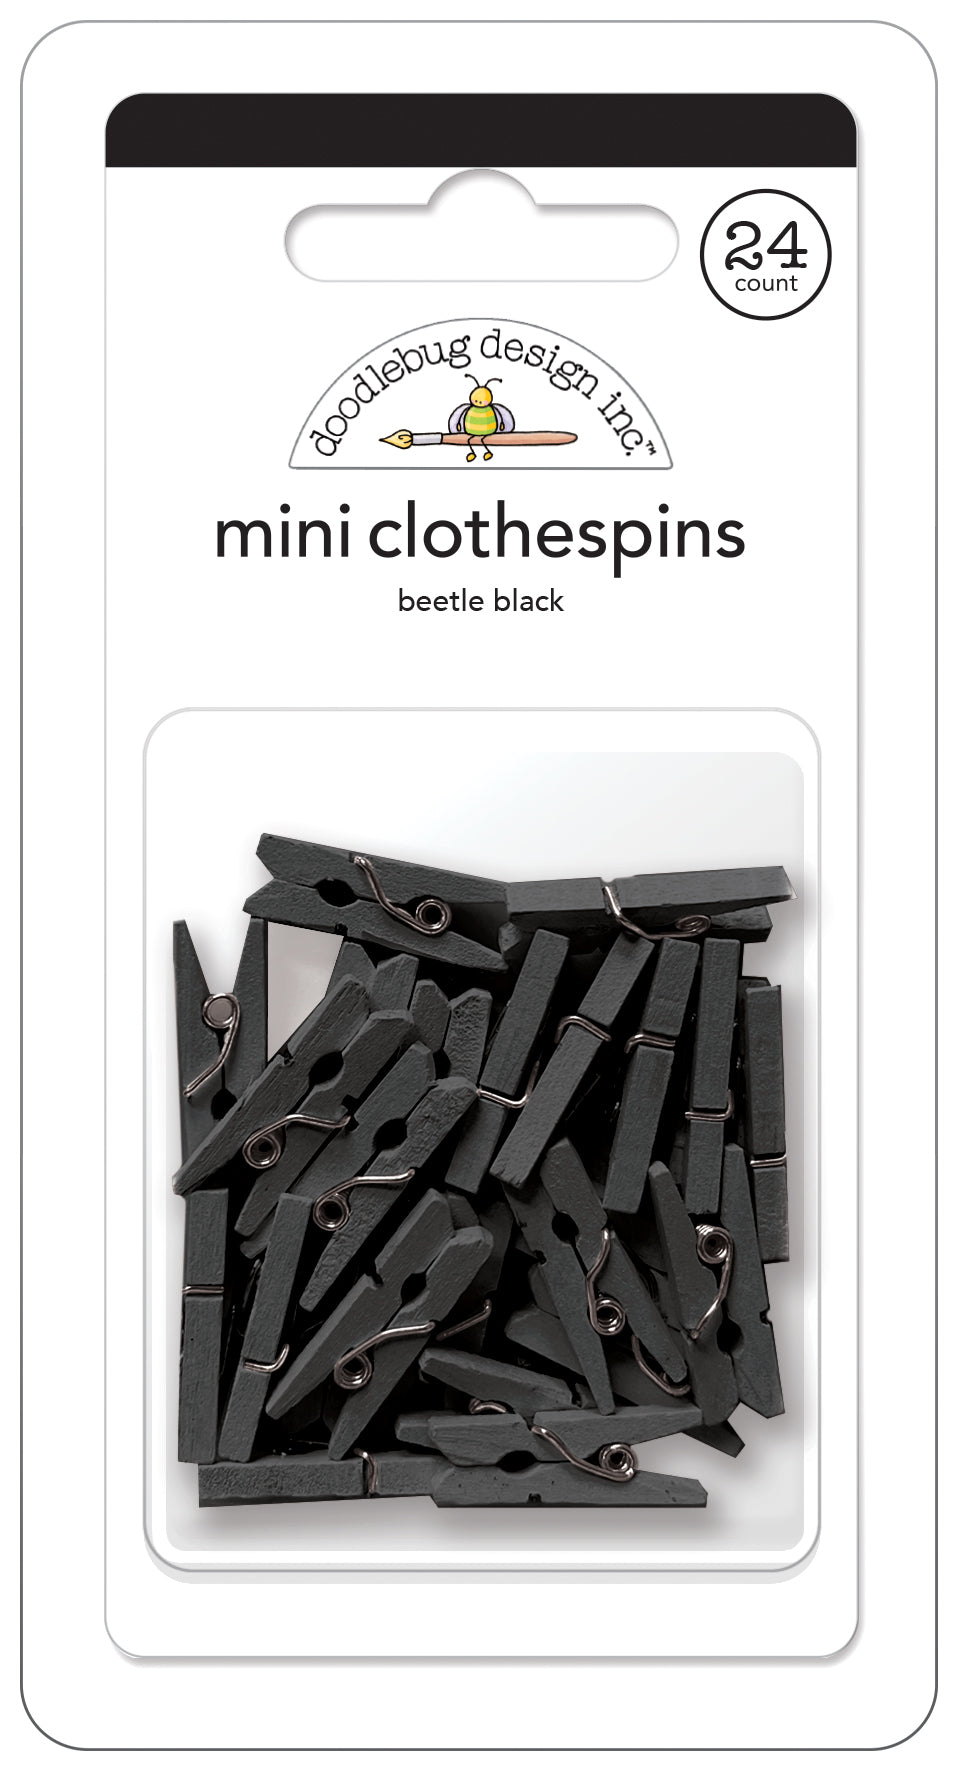 Doodlebug NEW Mini Clothespins Beetle Black